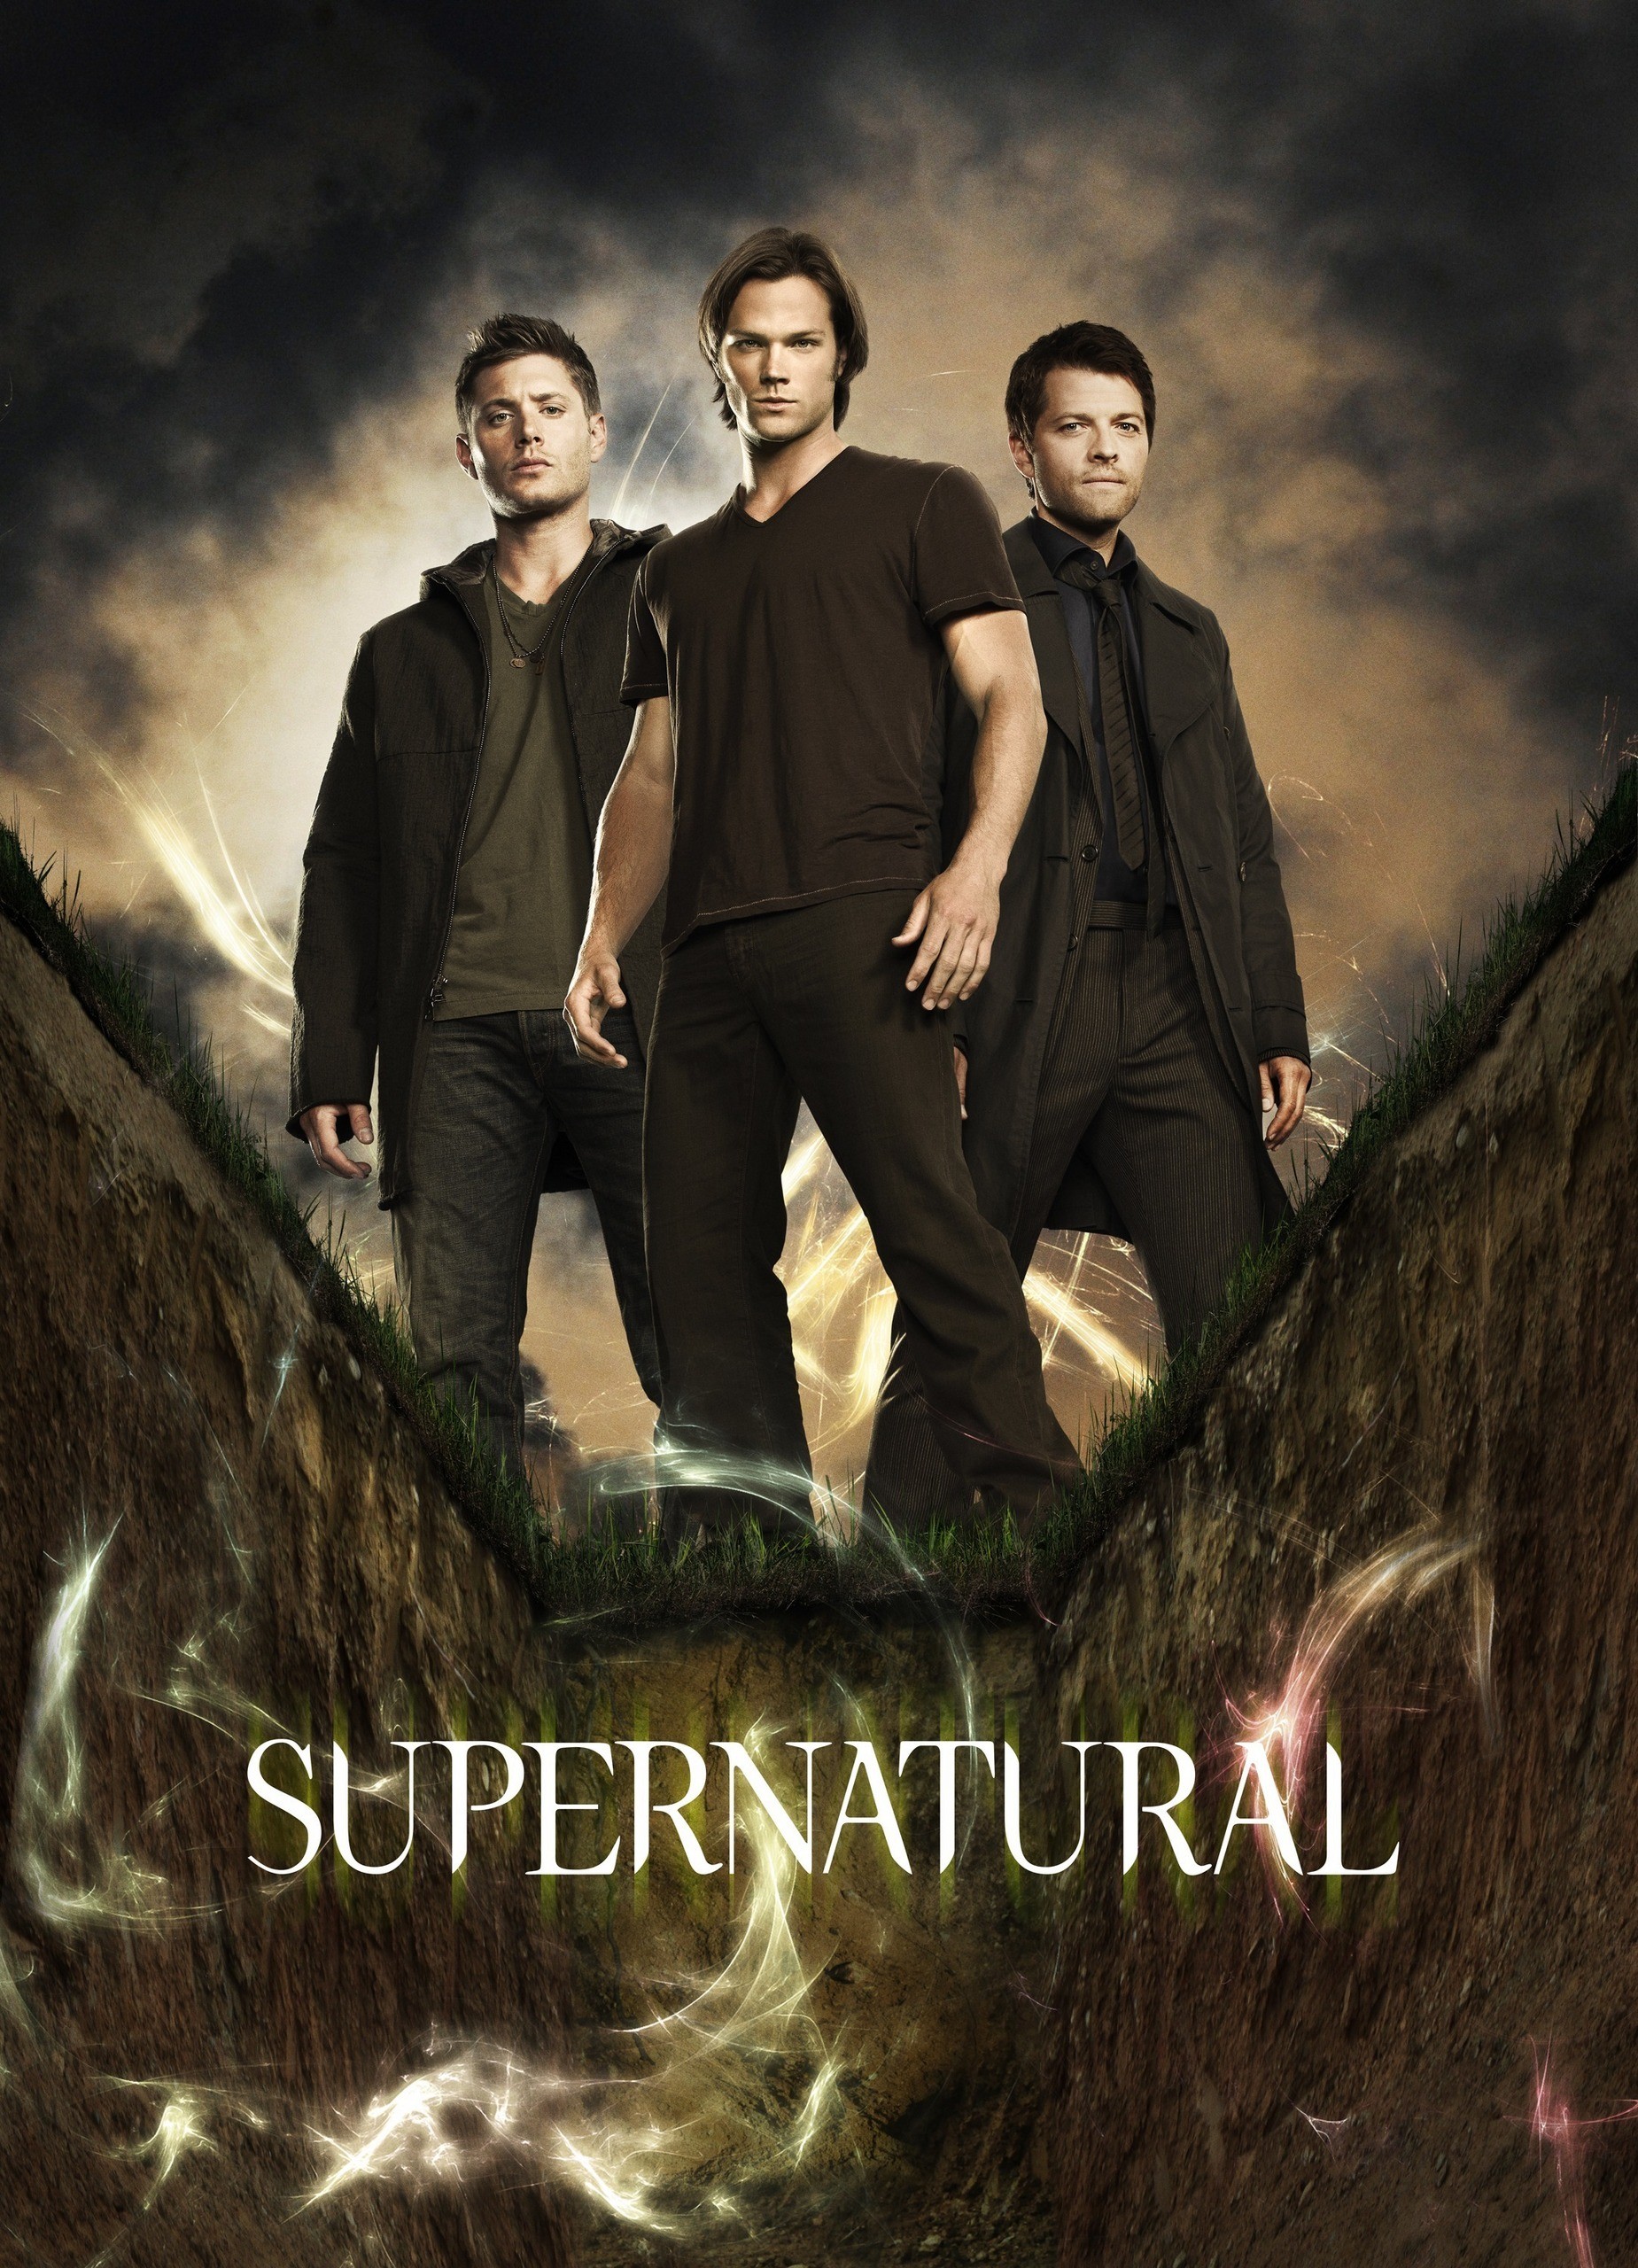 Supernatural Season 6 Wallpaper background picture